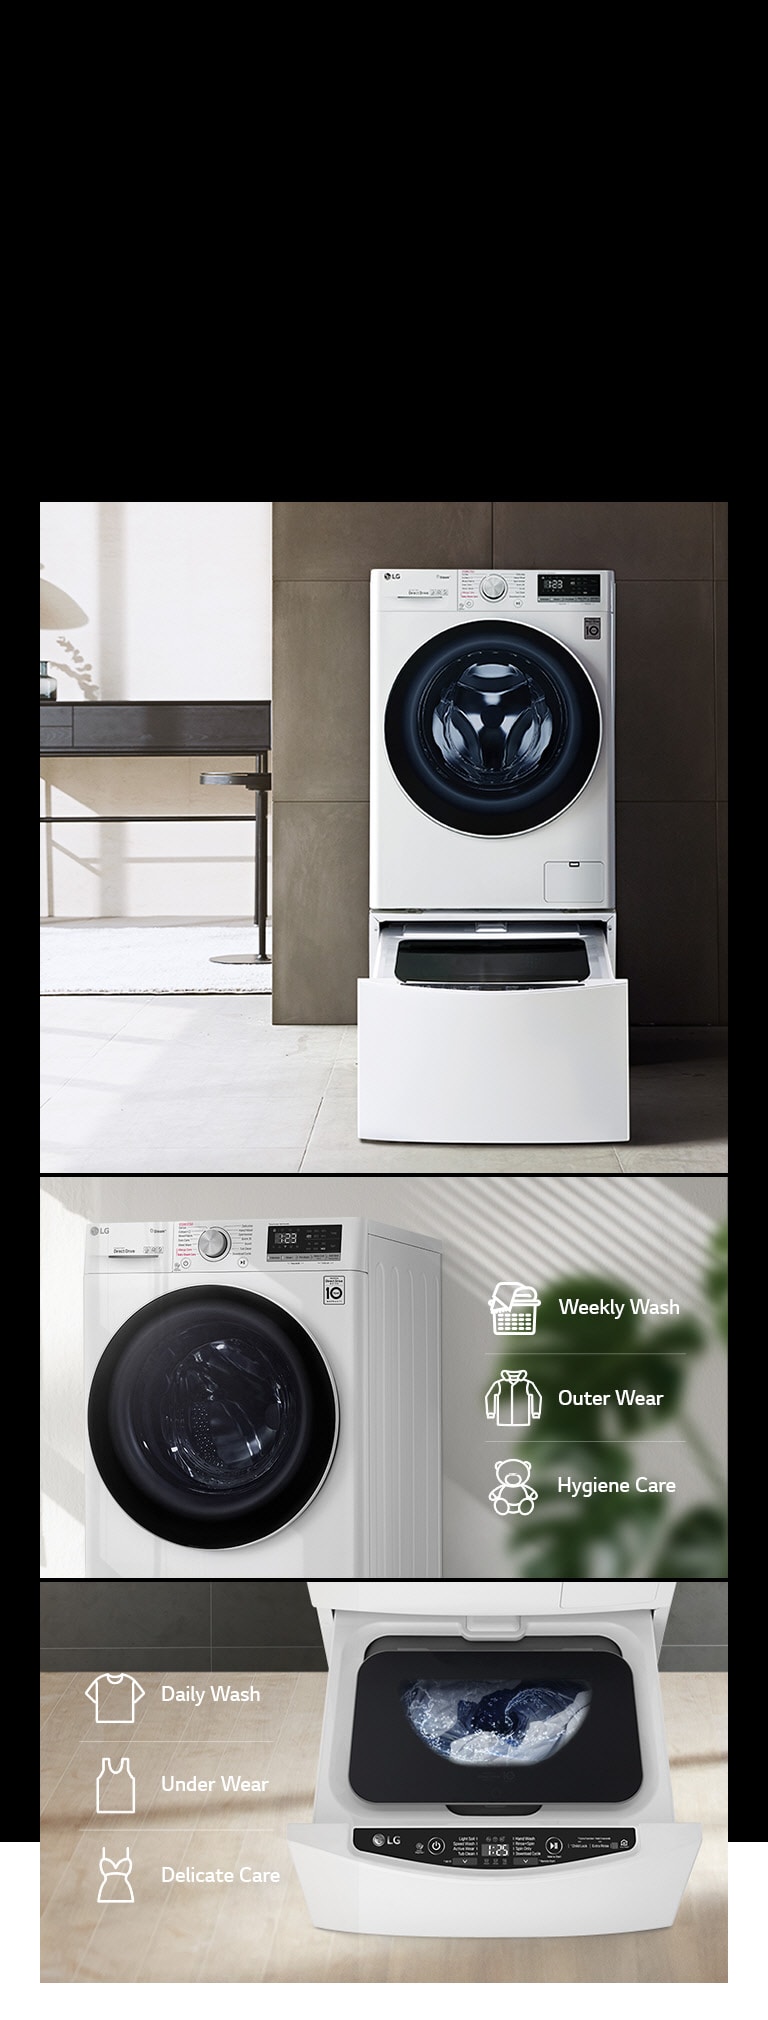 Machine: Care LG Advanced Washing Laundry F4V5VYP2T